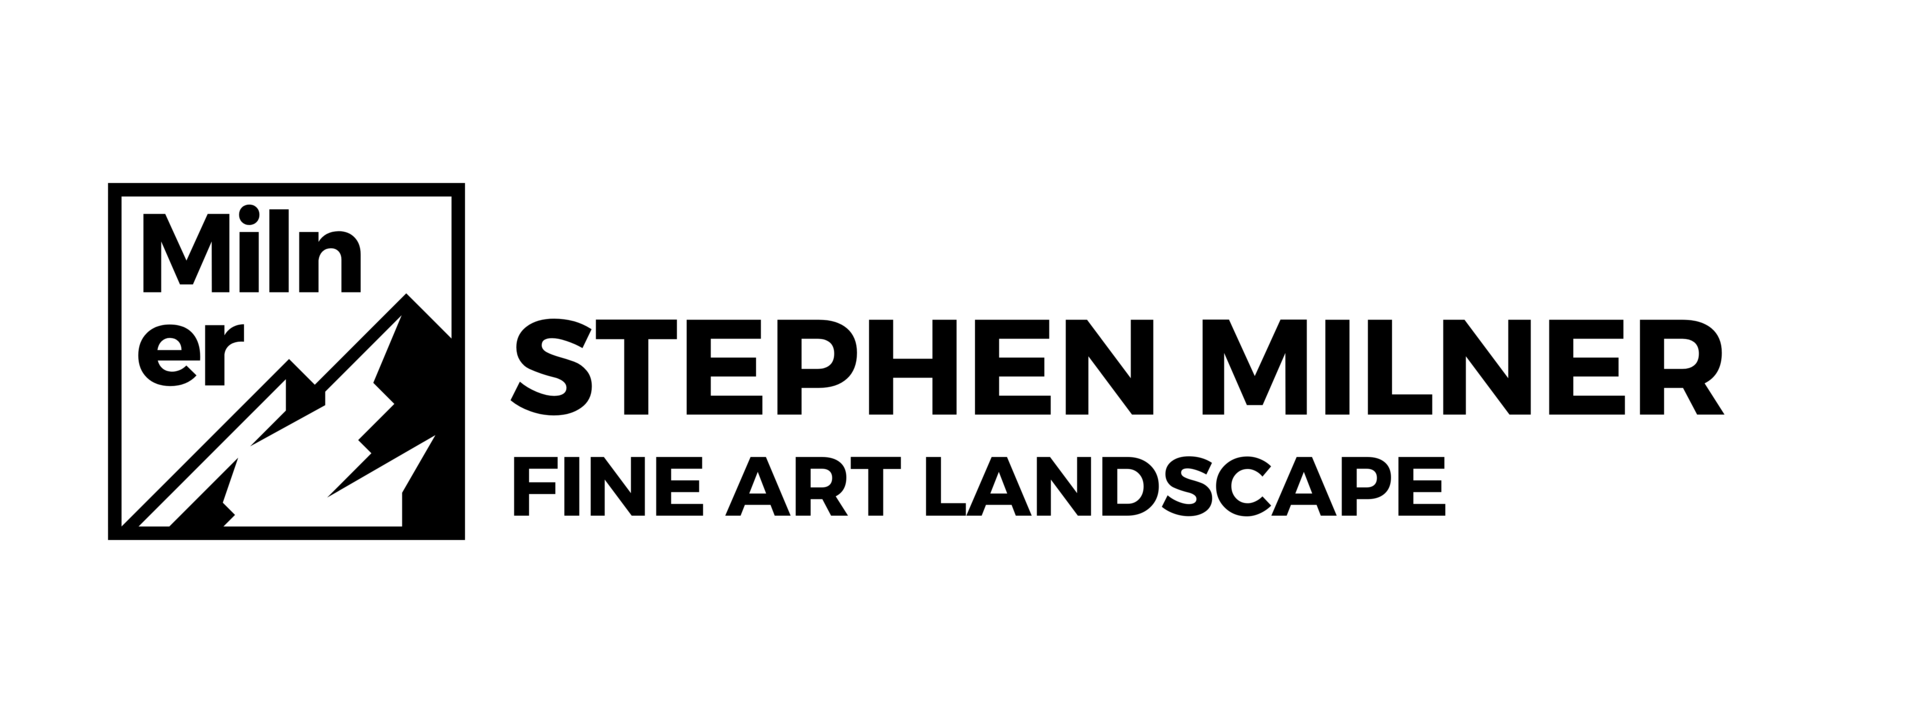 Logo New Black Transparent.png